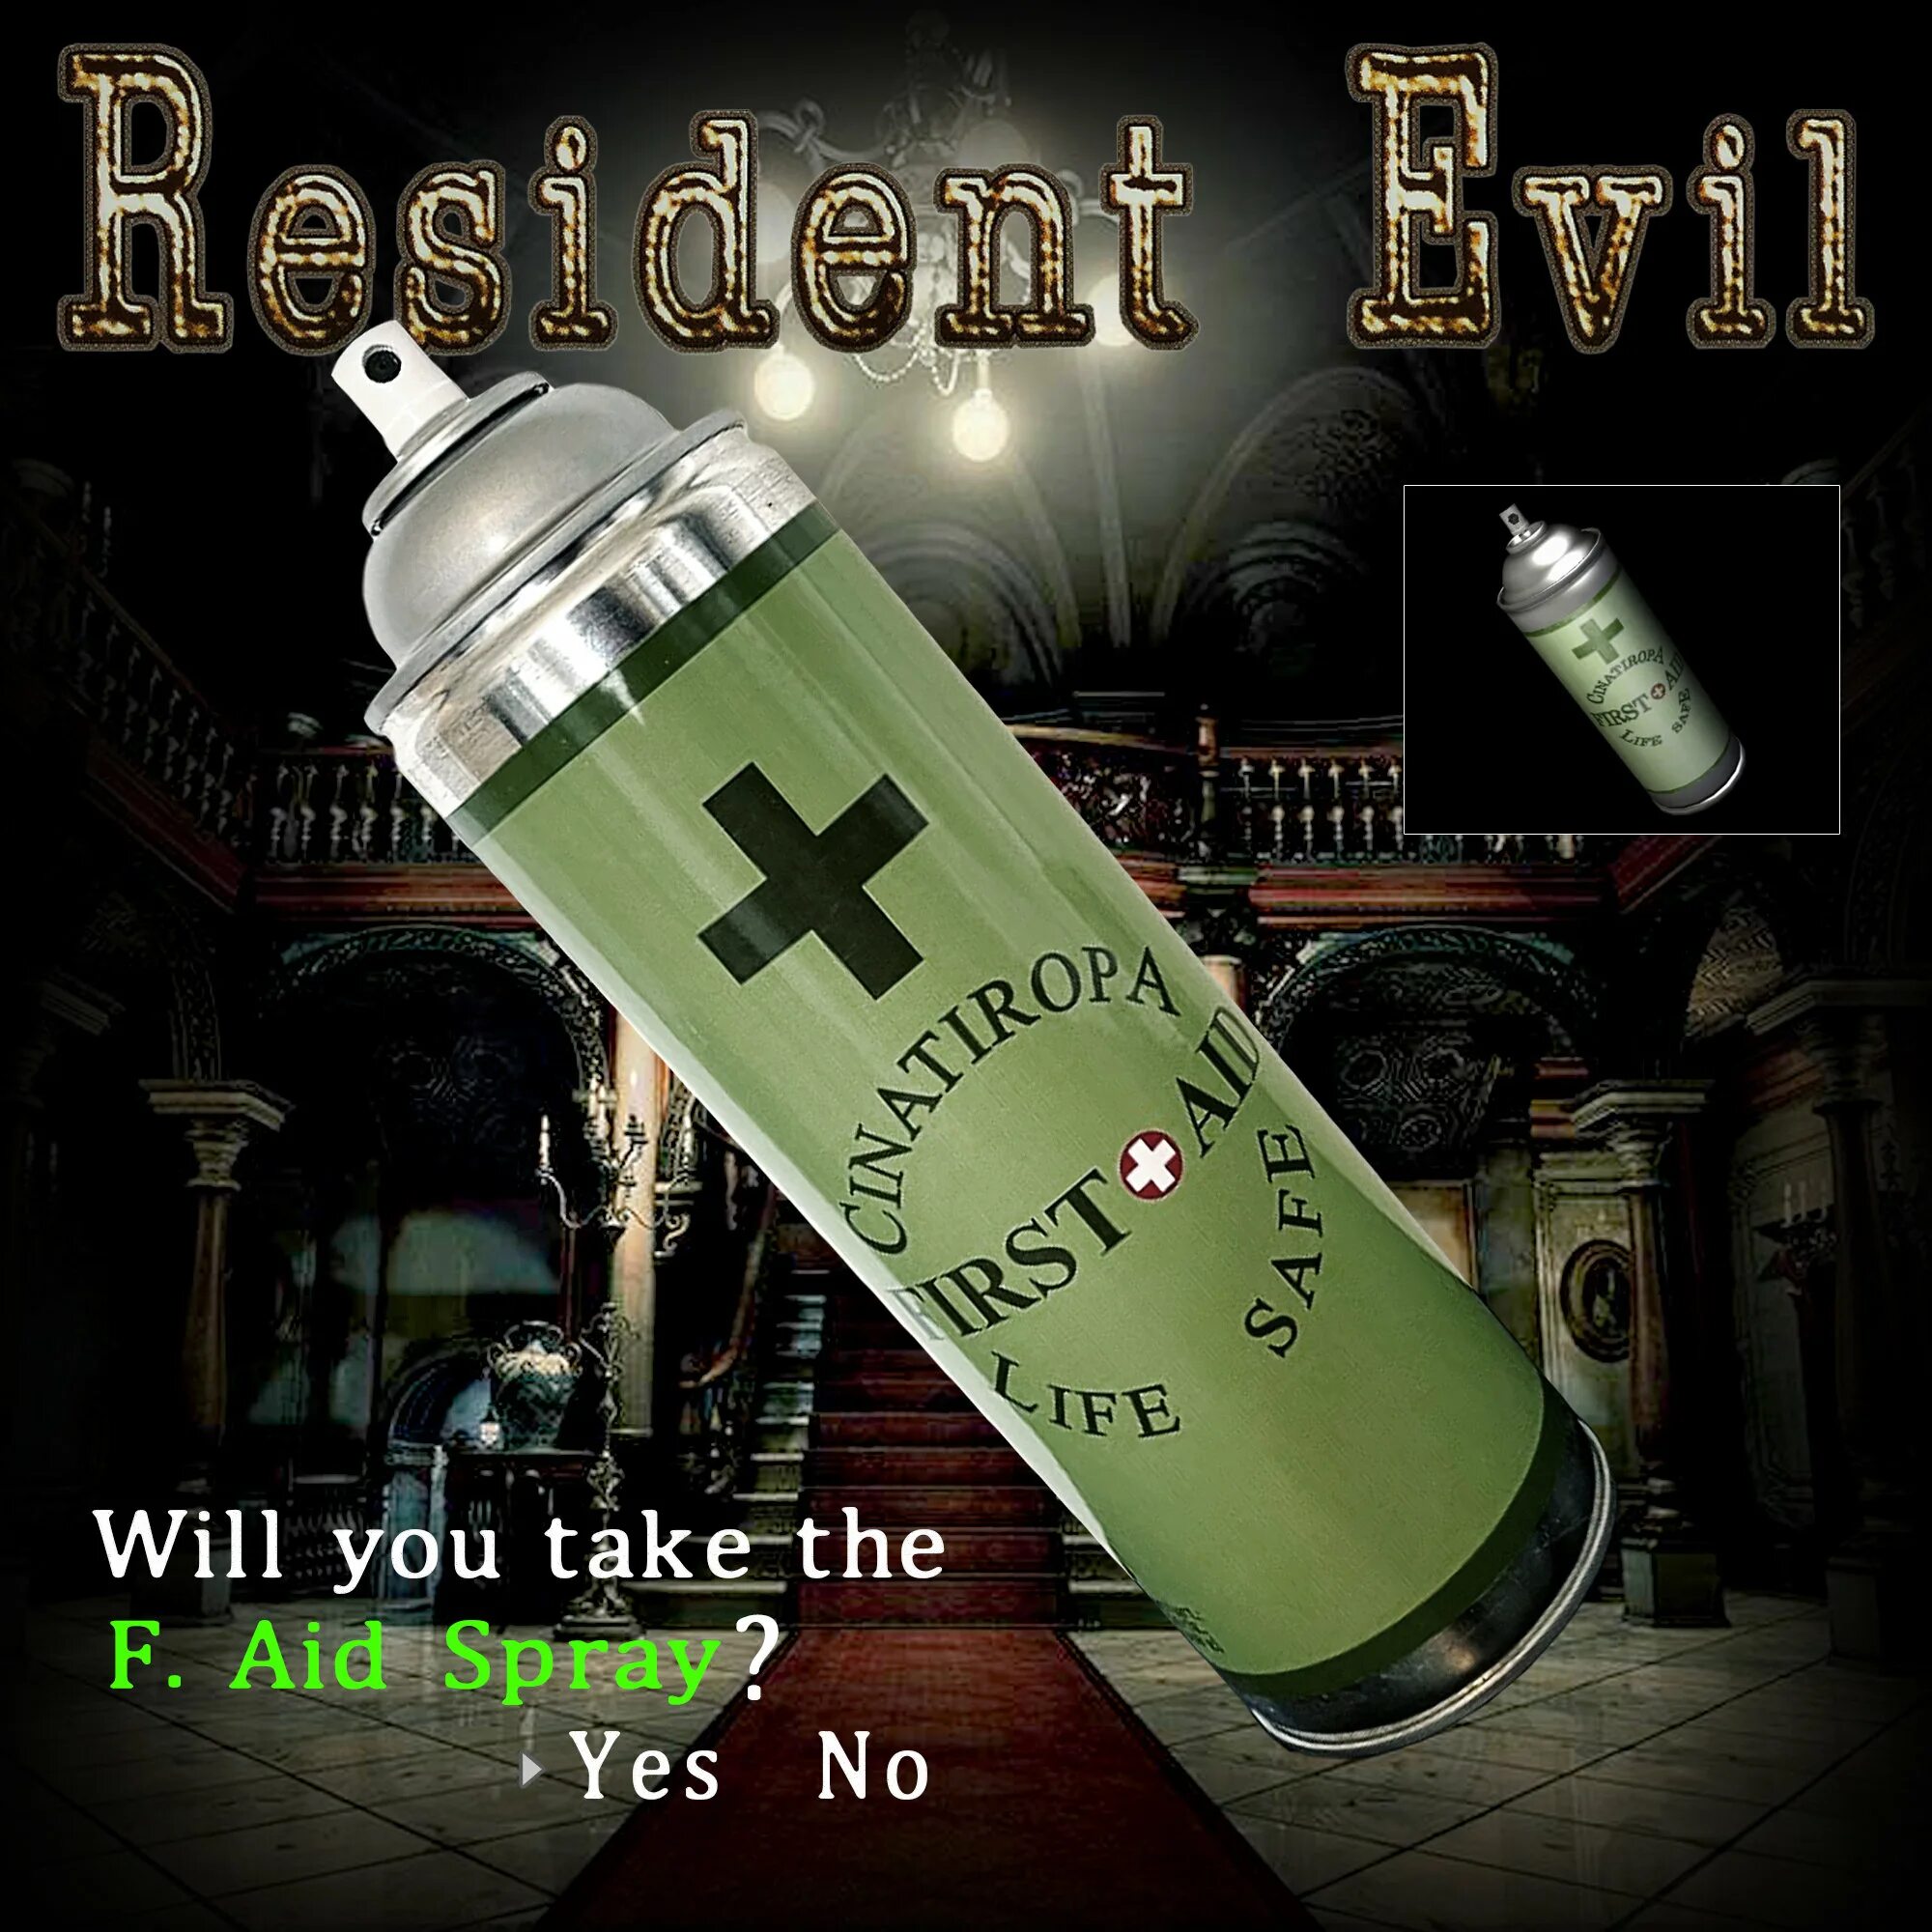 Лечебный спрей Resident Evil. Resident Evil лечебный спрей этикетка. Resident Evil лечебный спрей этикетка на спрее. Resident Evil лечебный спрей развёрнутая этикетка. Спрей этикетка